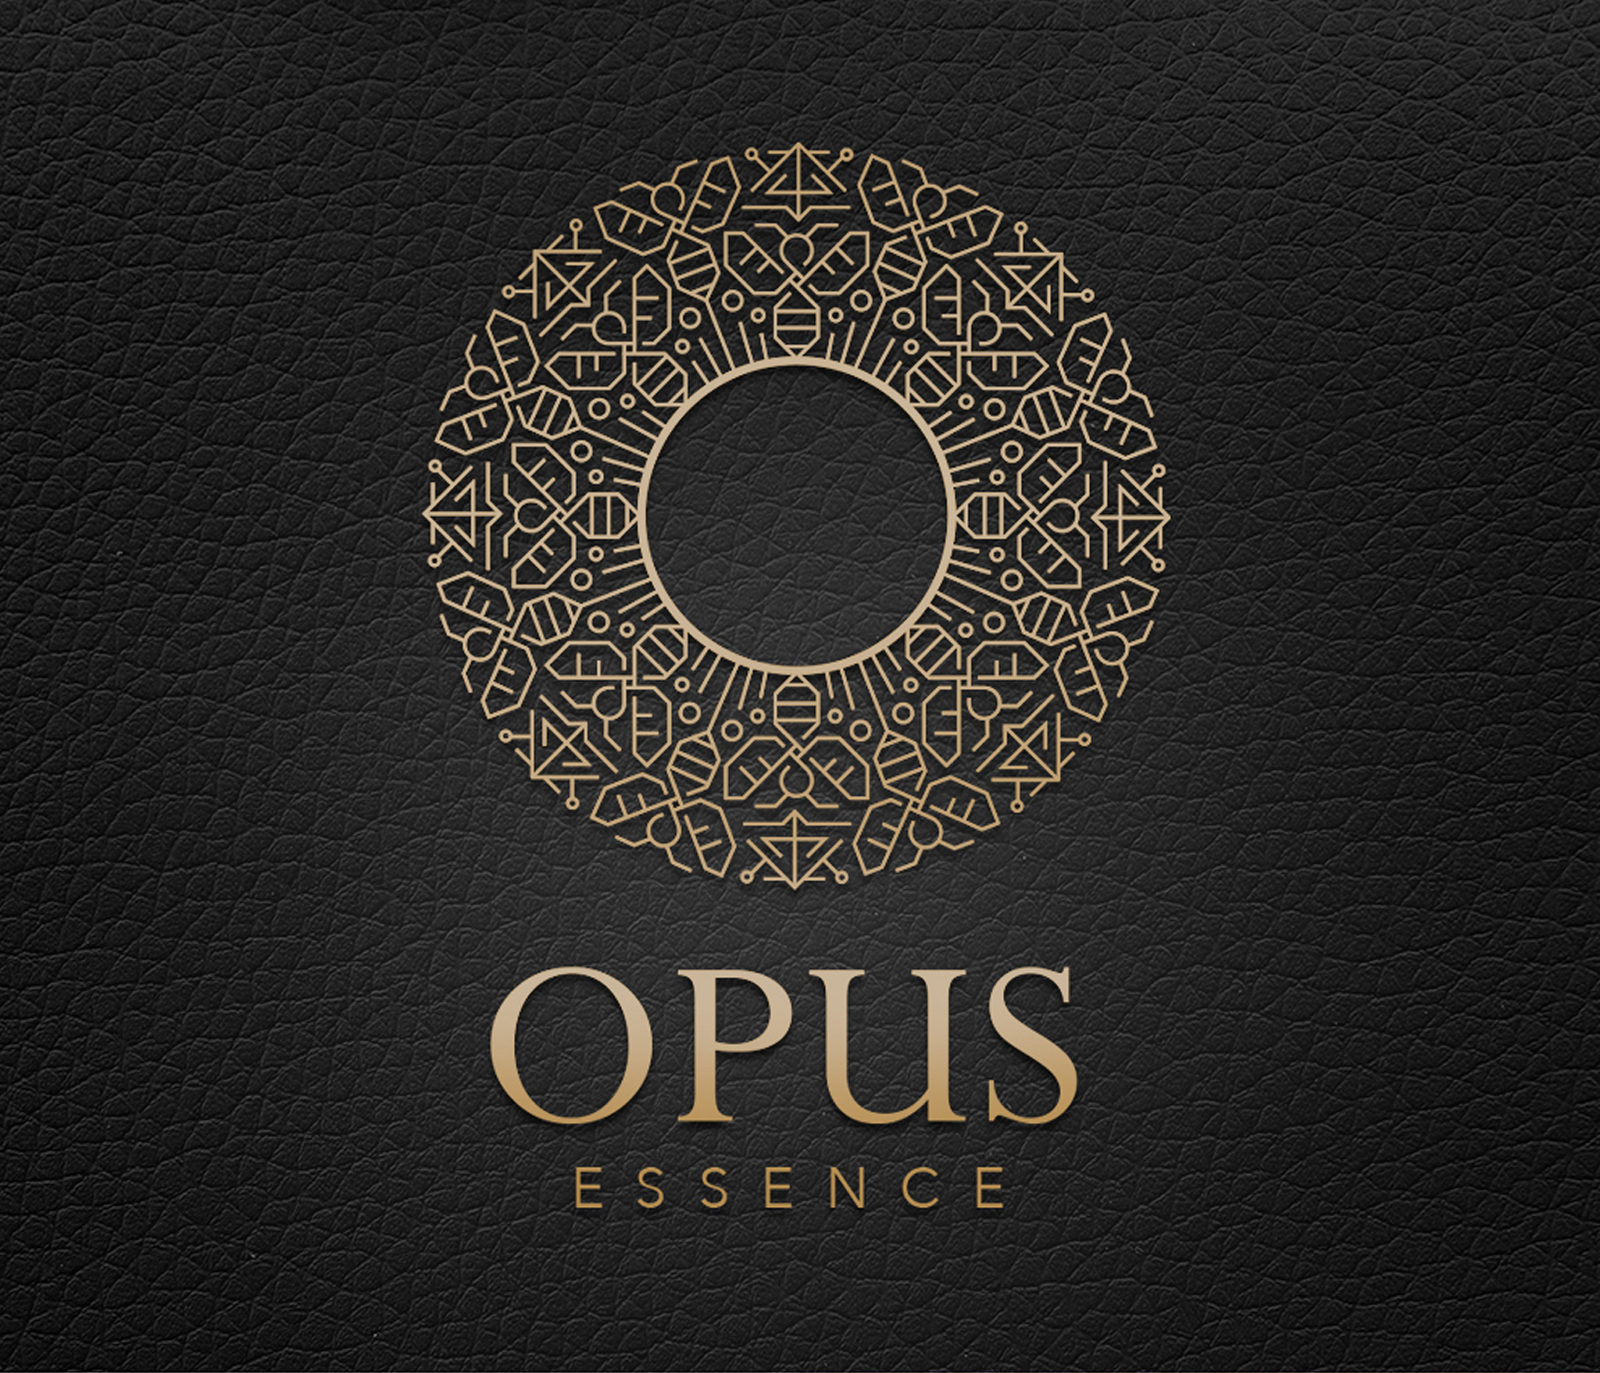 Opus Essence Branding